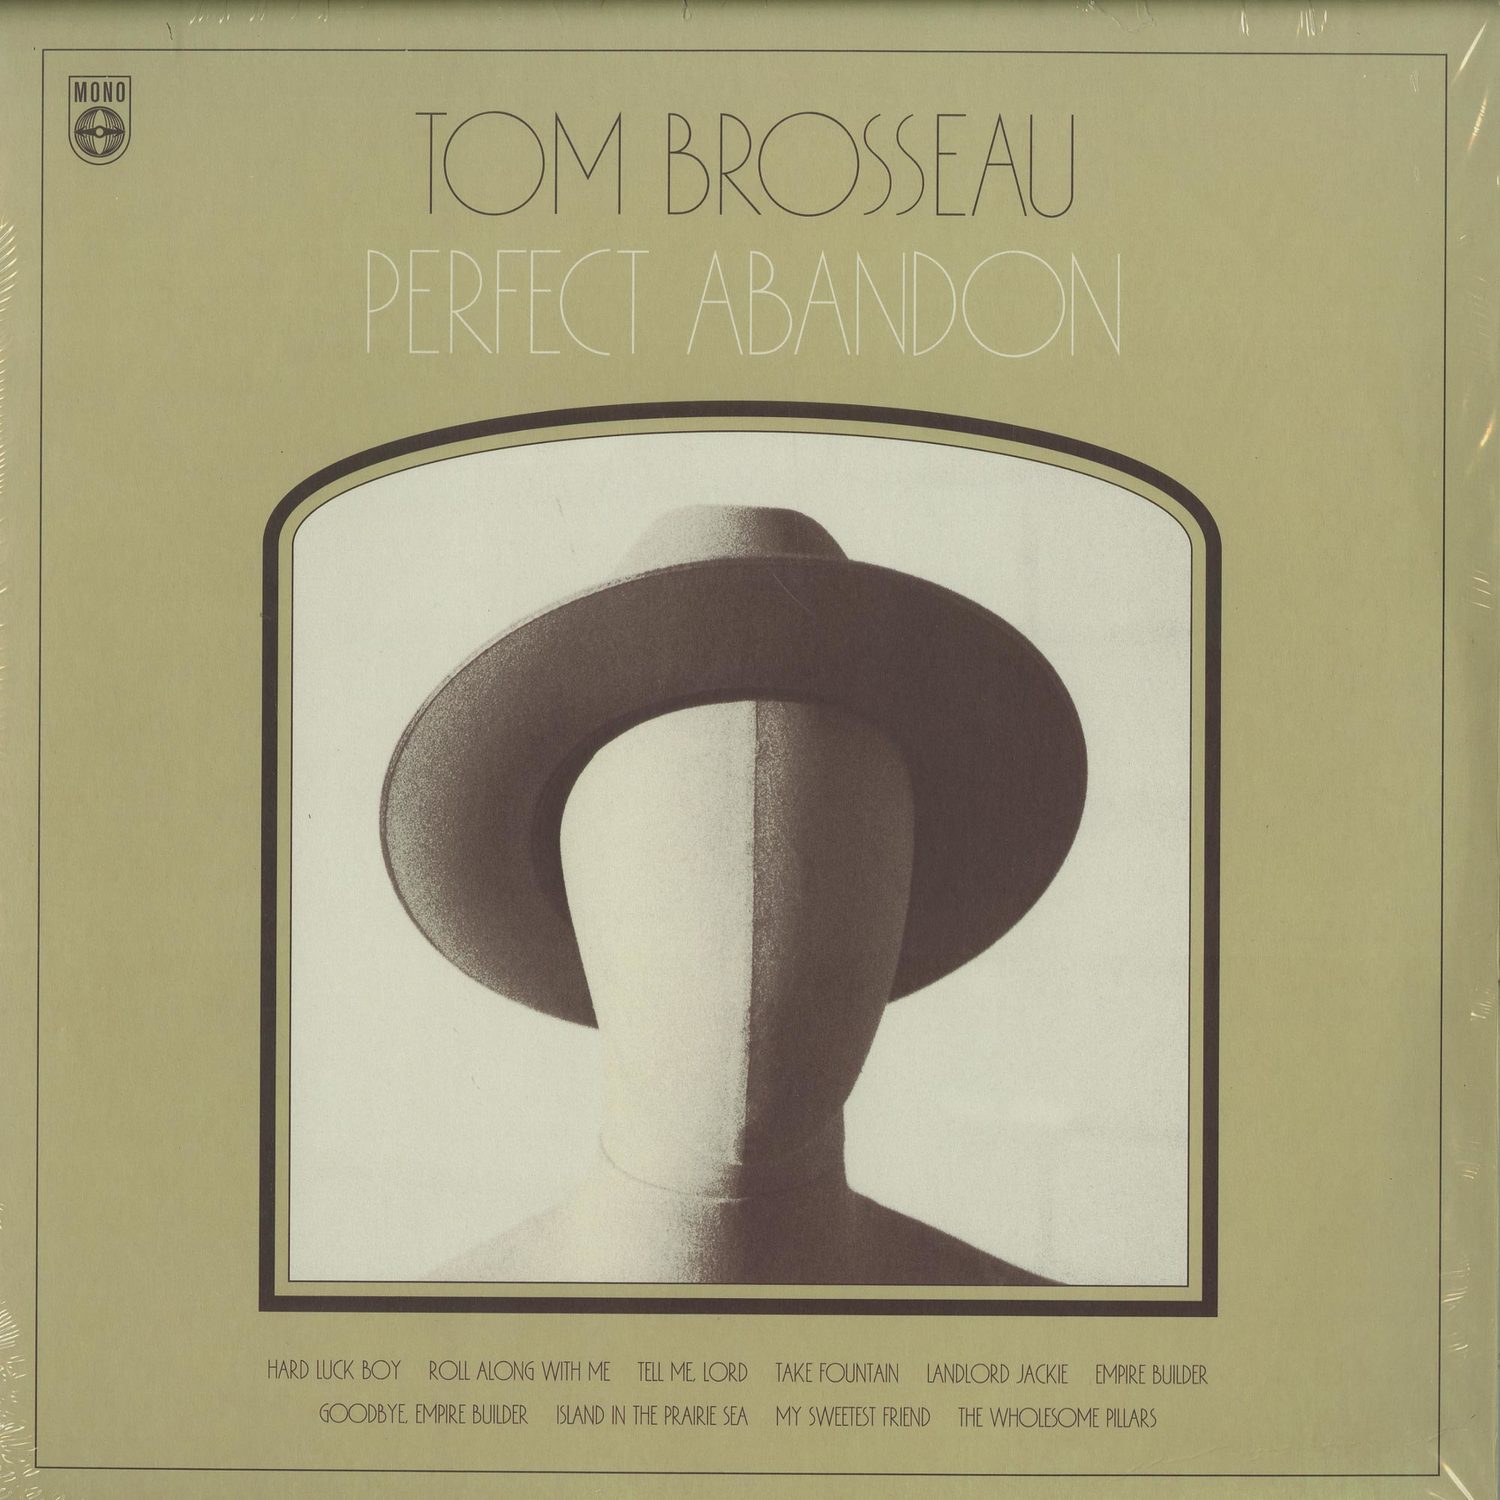 Tom Brosseau - PERFECT ABANDON 